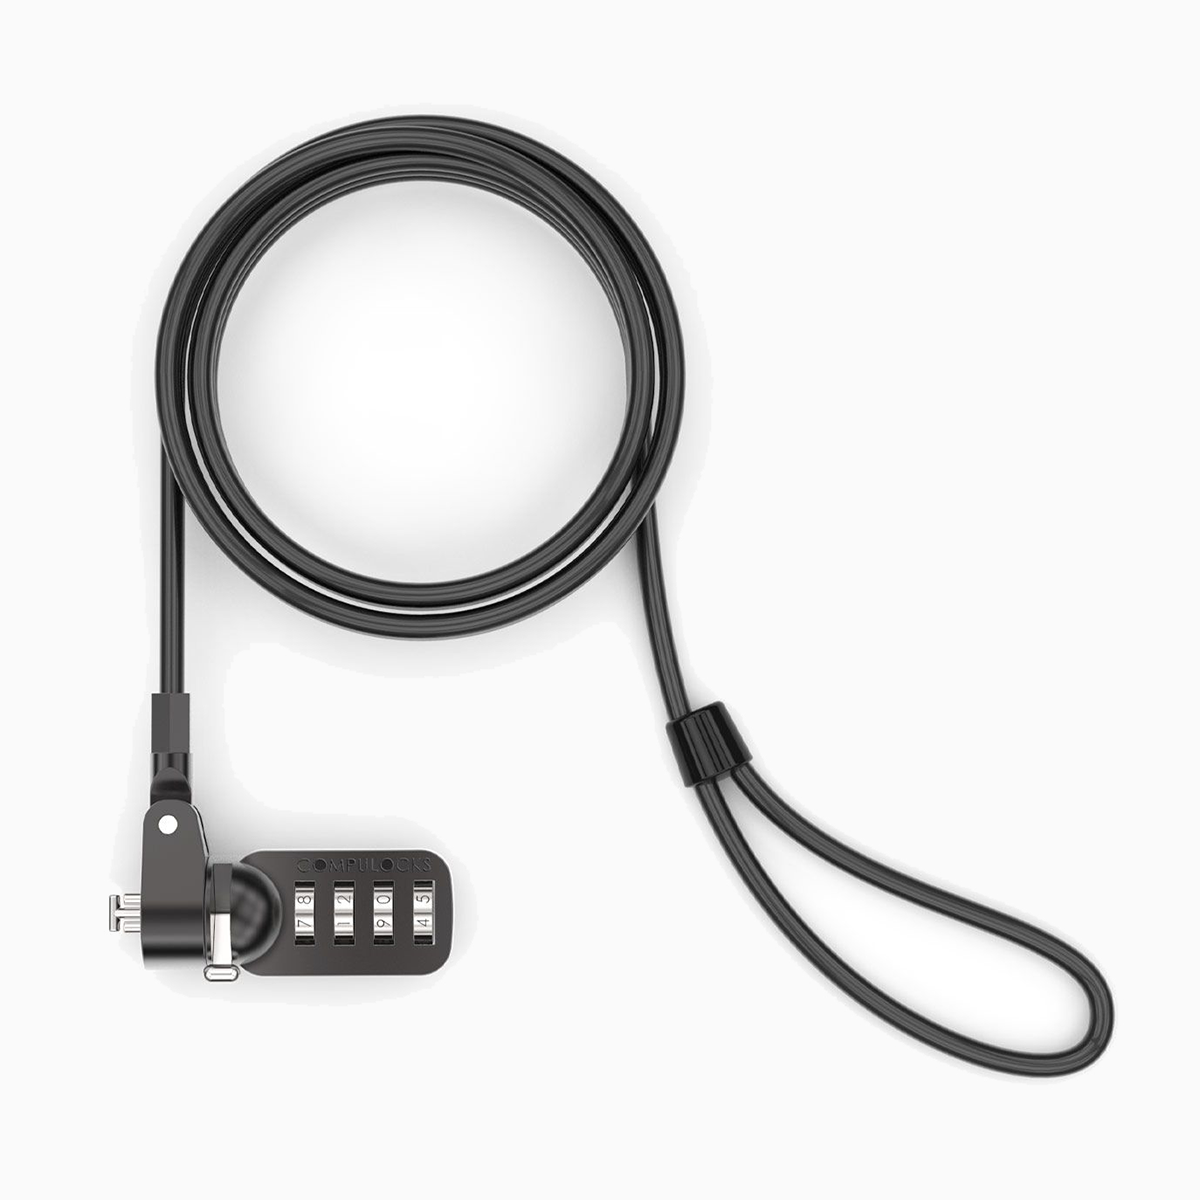 Buy Maclocks Universal Security Combination Cable Lock Online